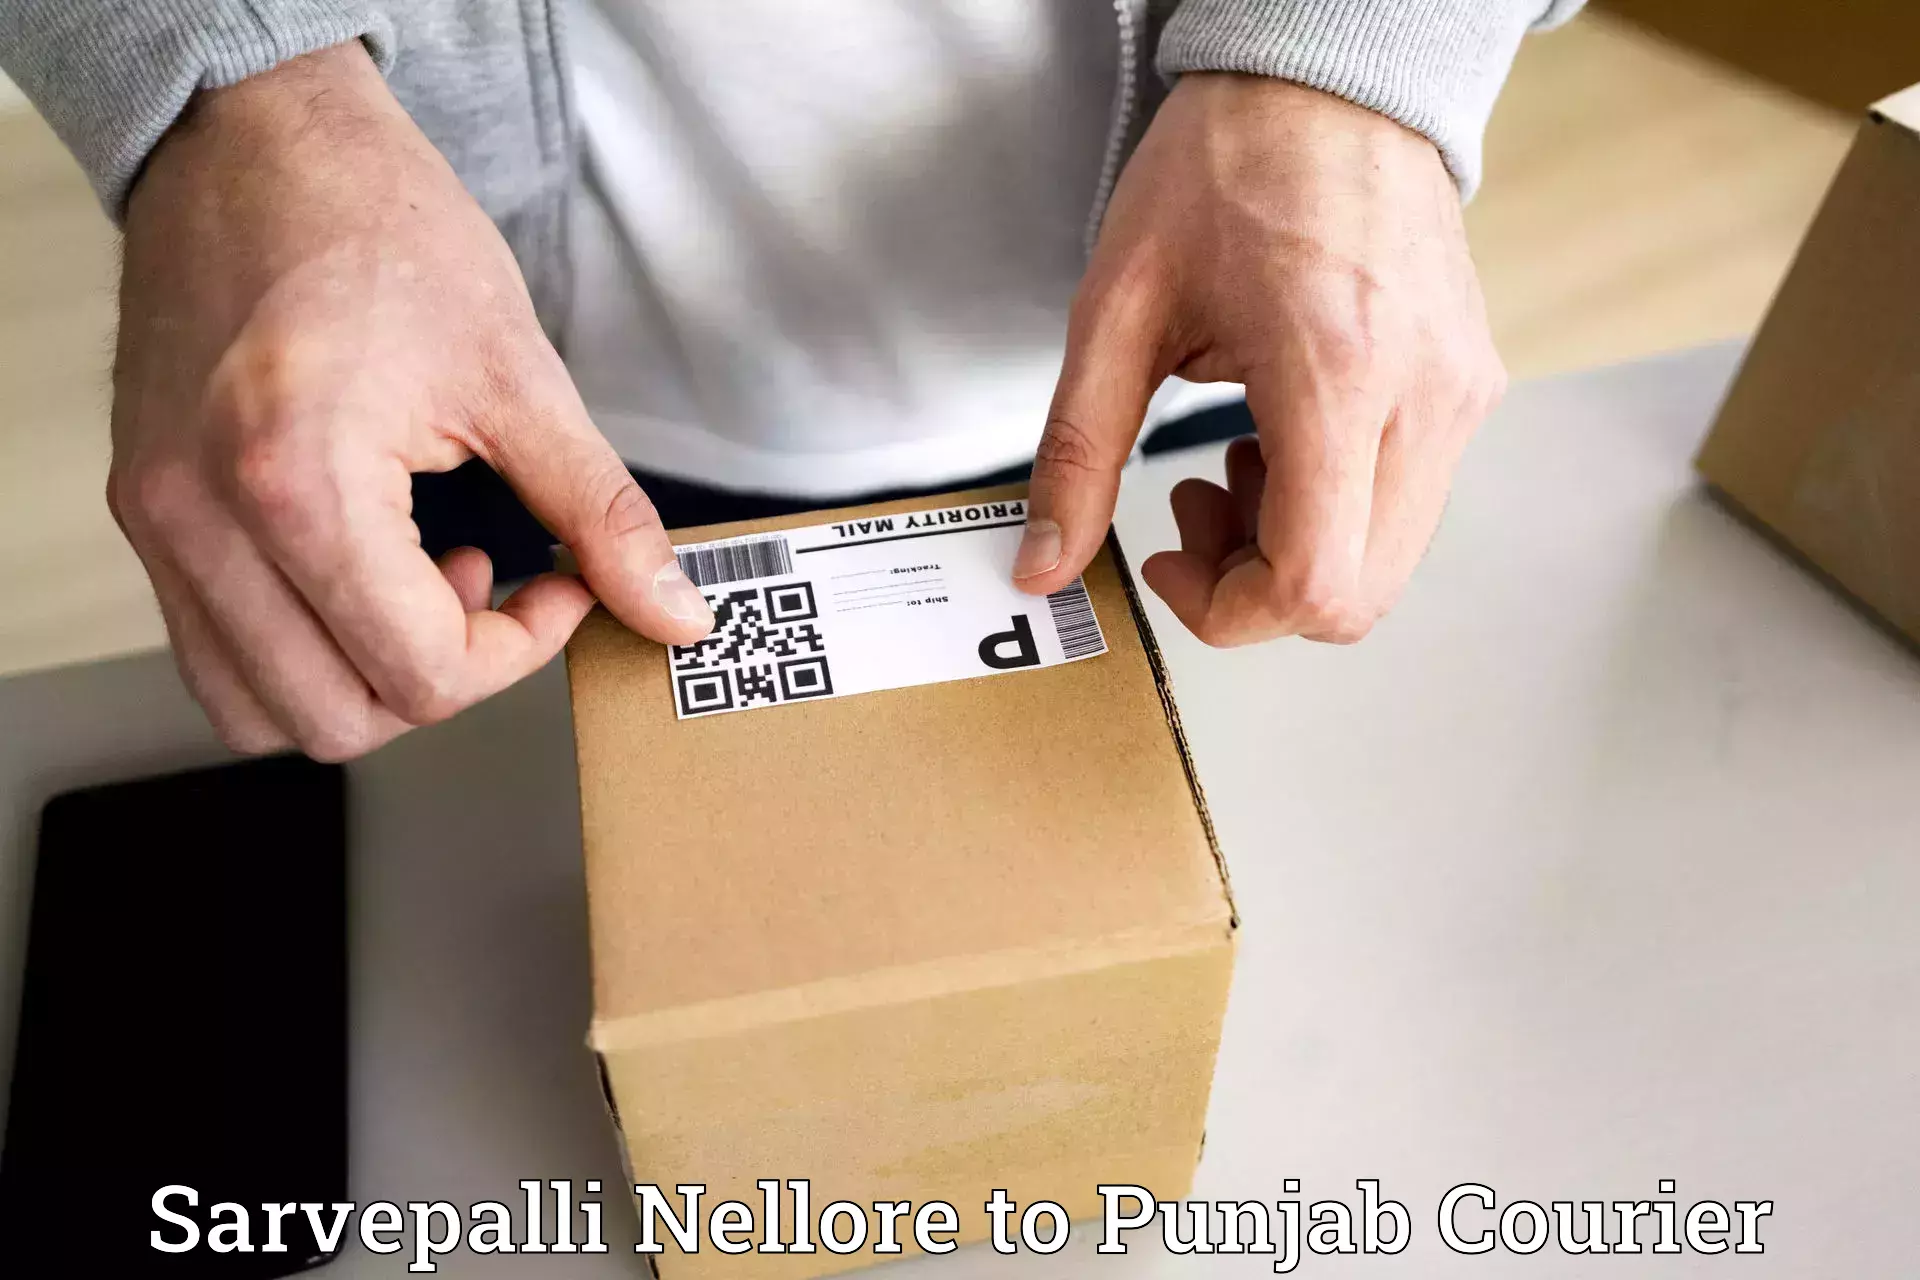 Package delivery network Sarvepalli Nellore to Hoshiarpur